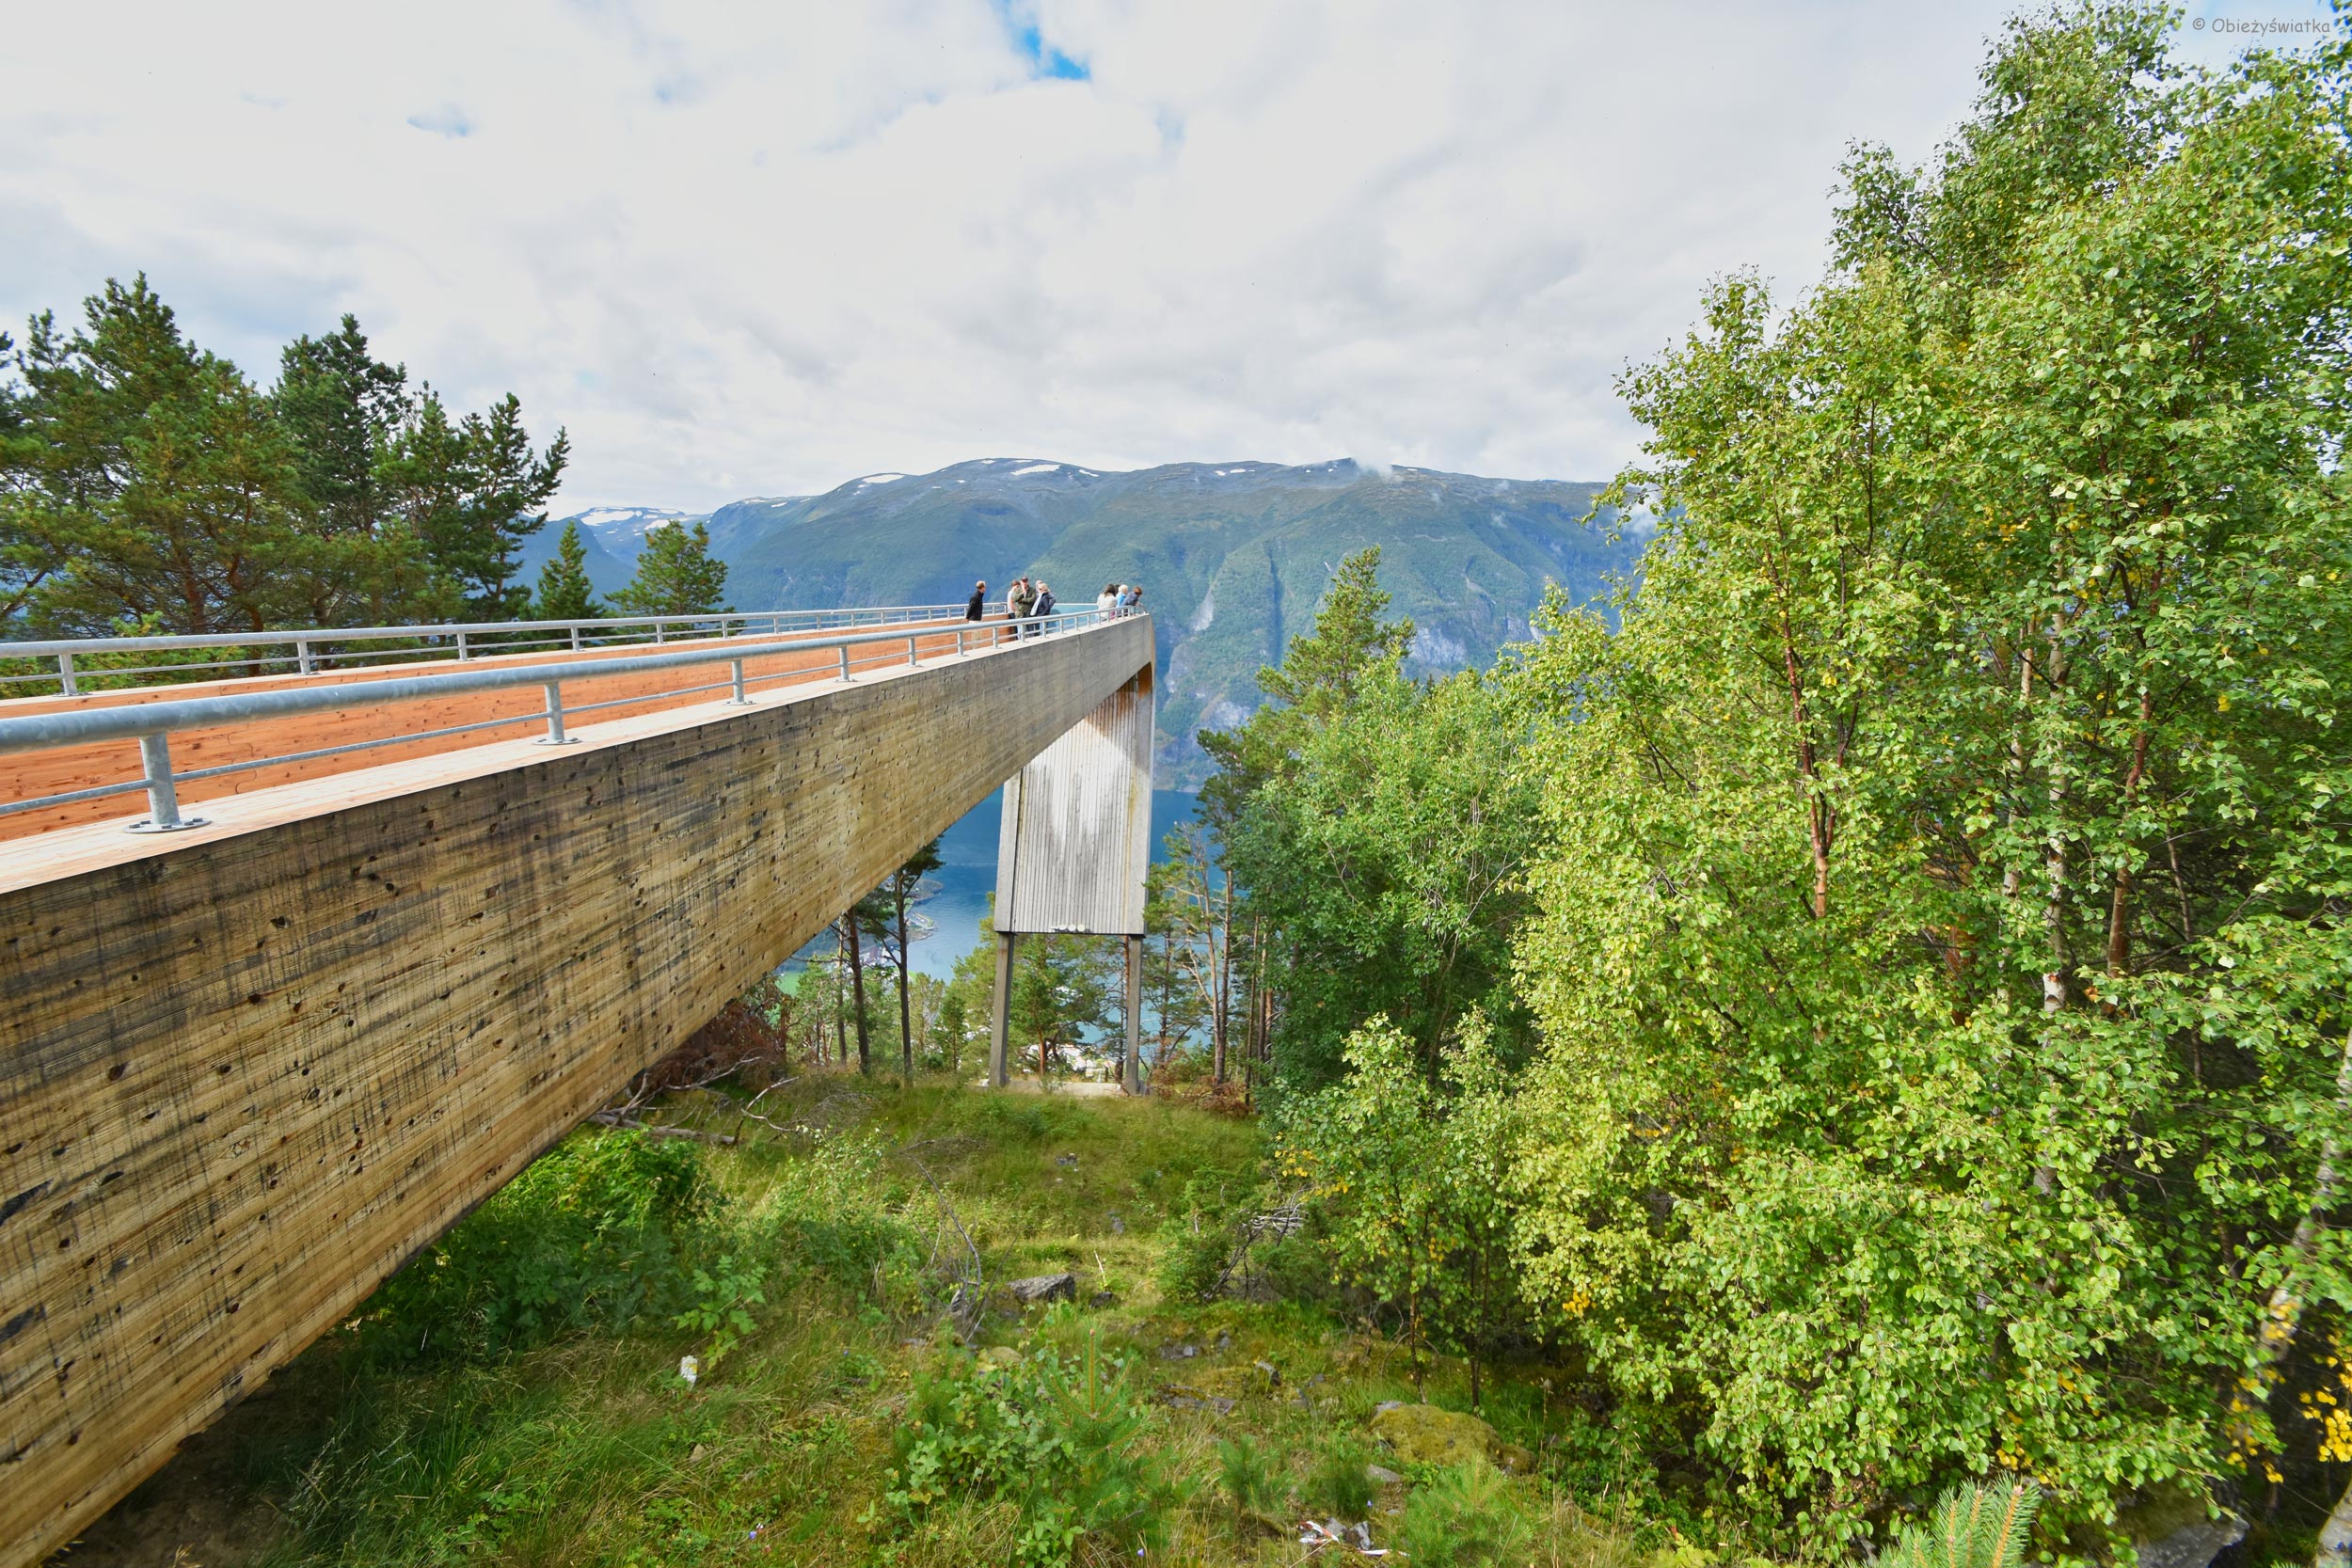 Platforma widokowa Stegastein, Norwegia